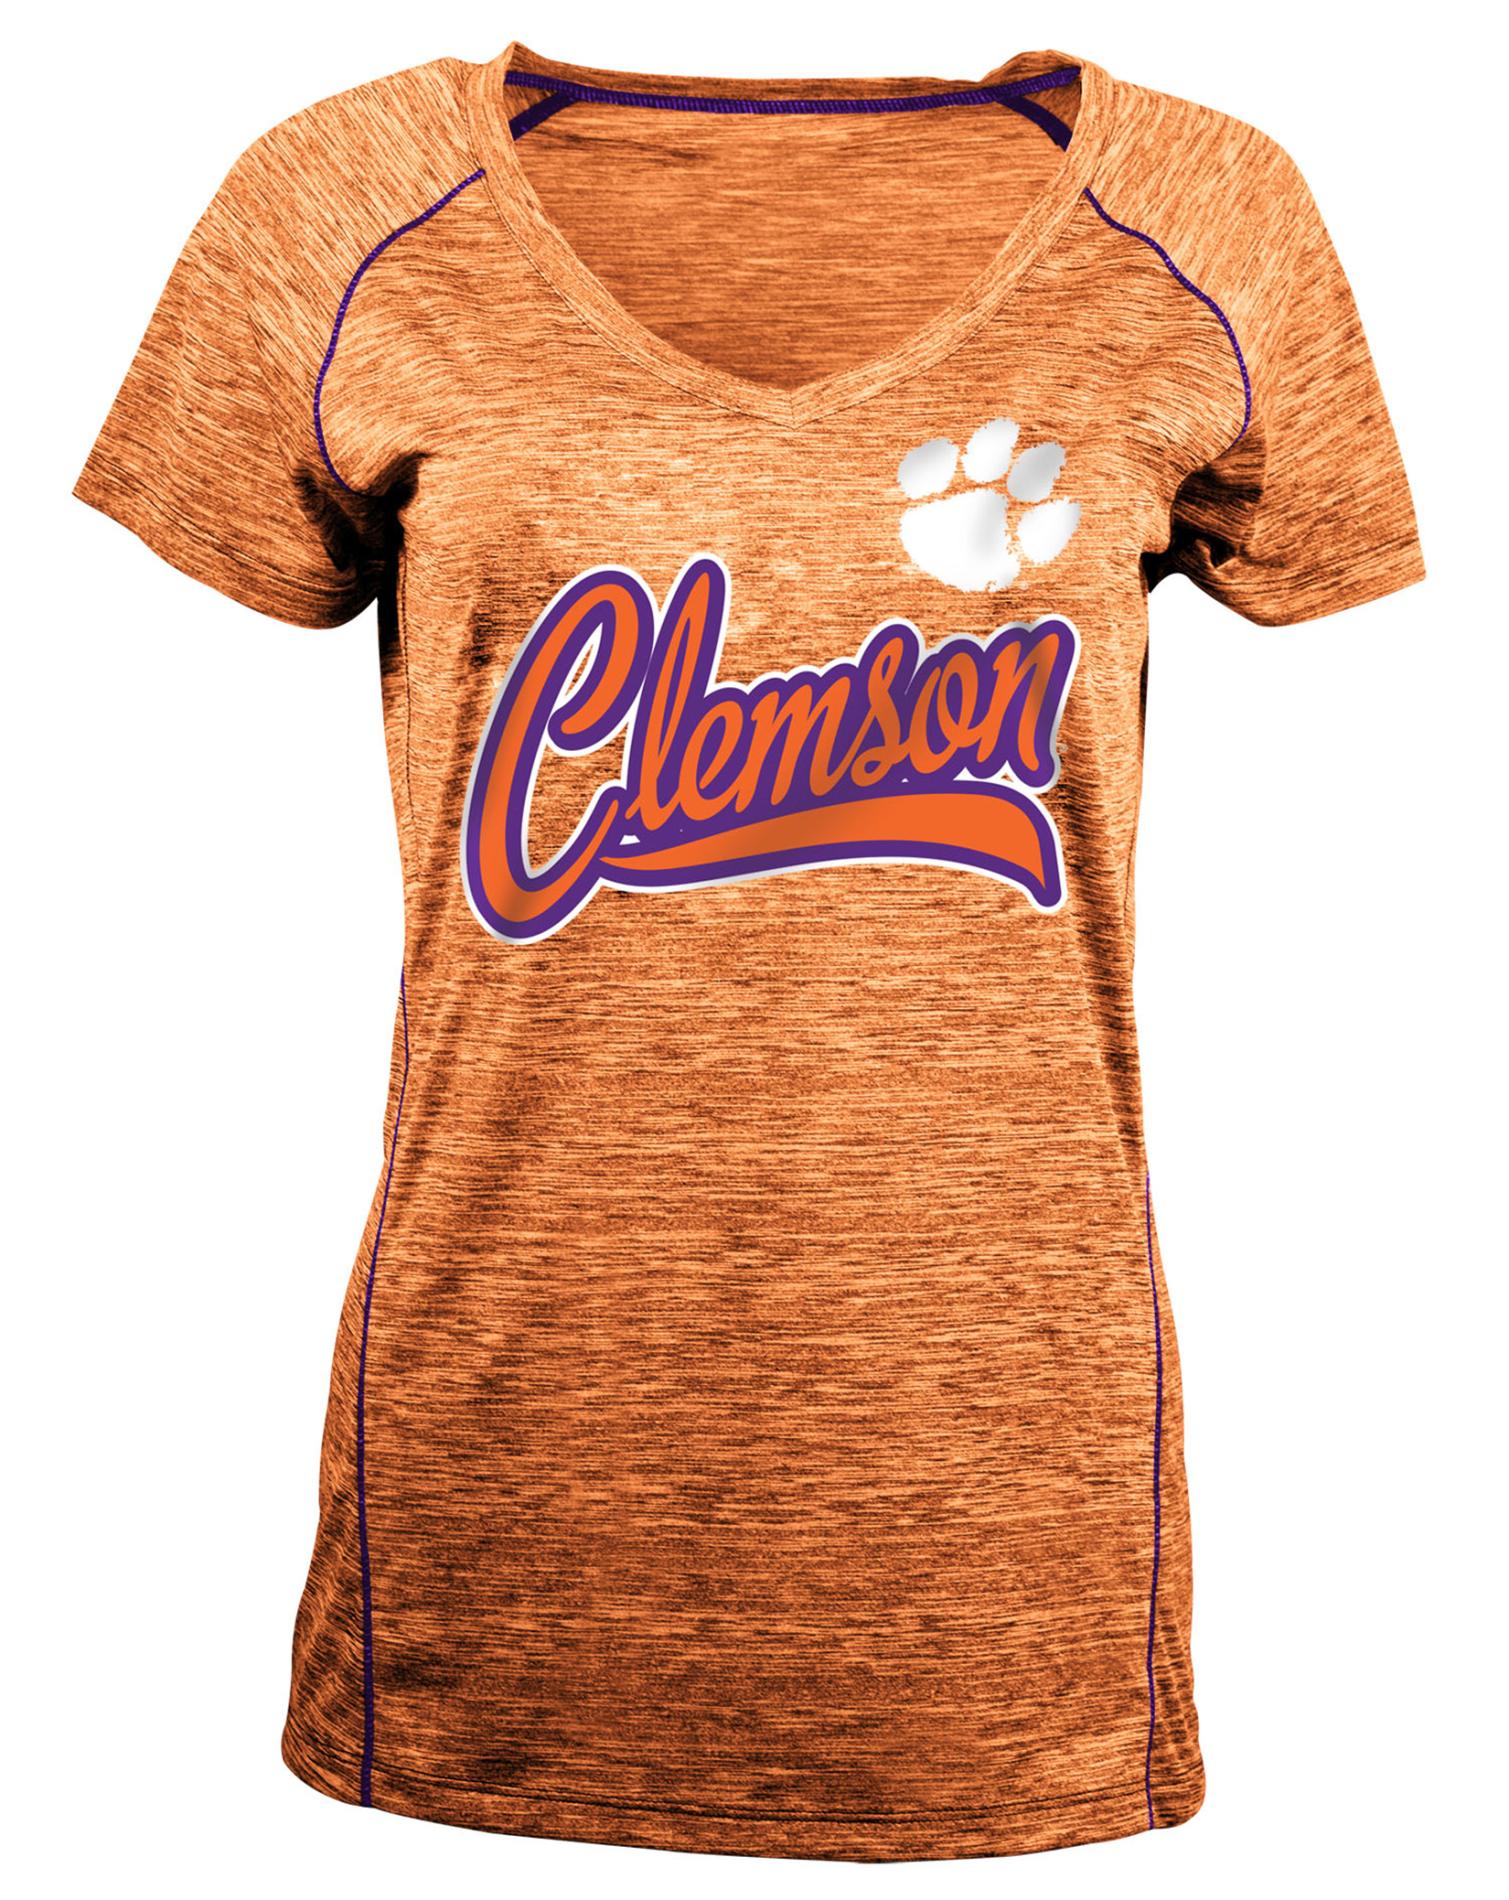 NCAA Women's Performance Shirt - Clemson University Tigers